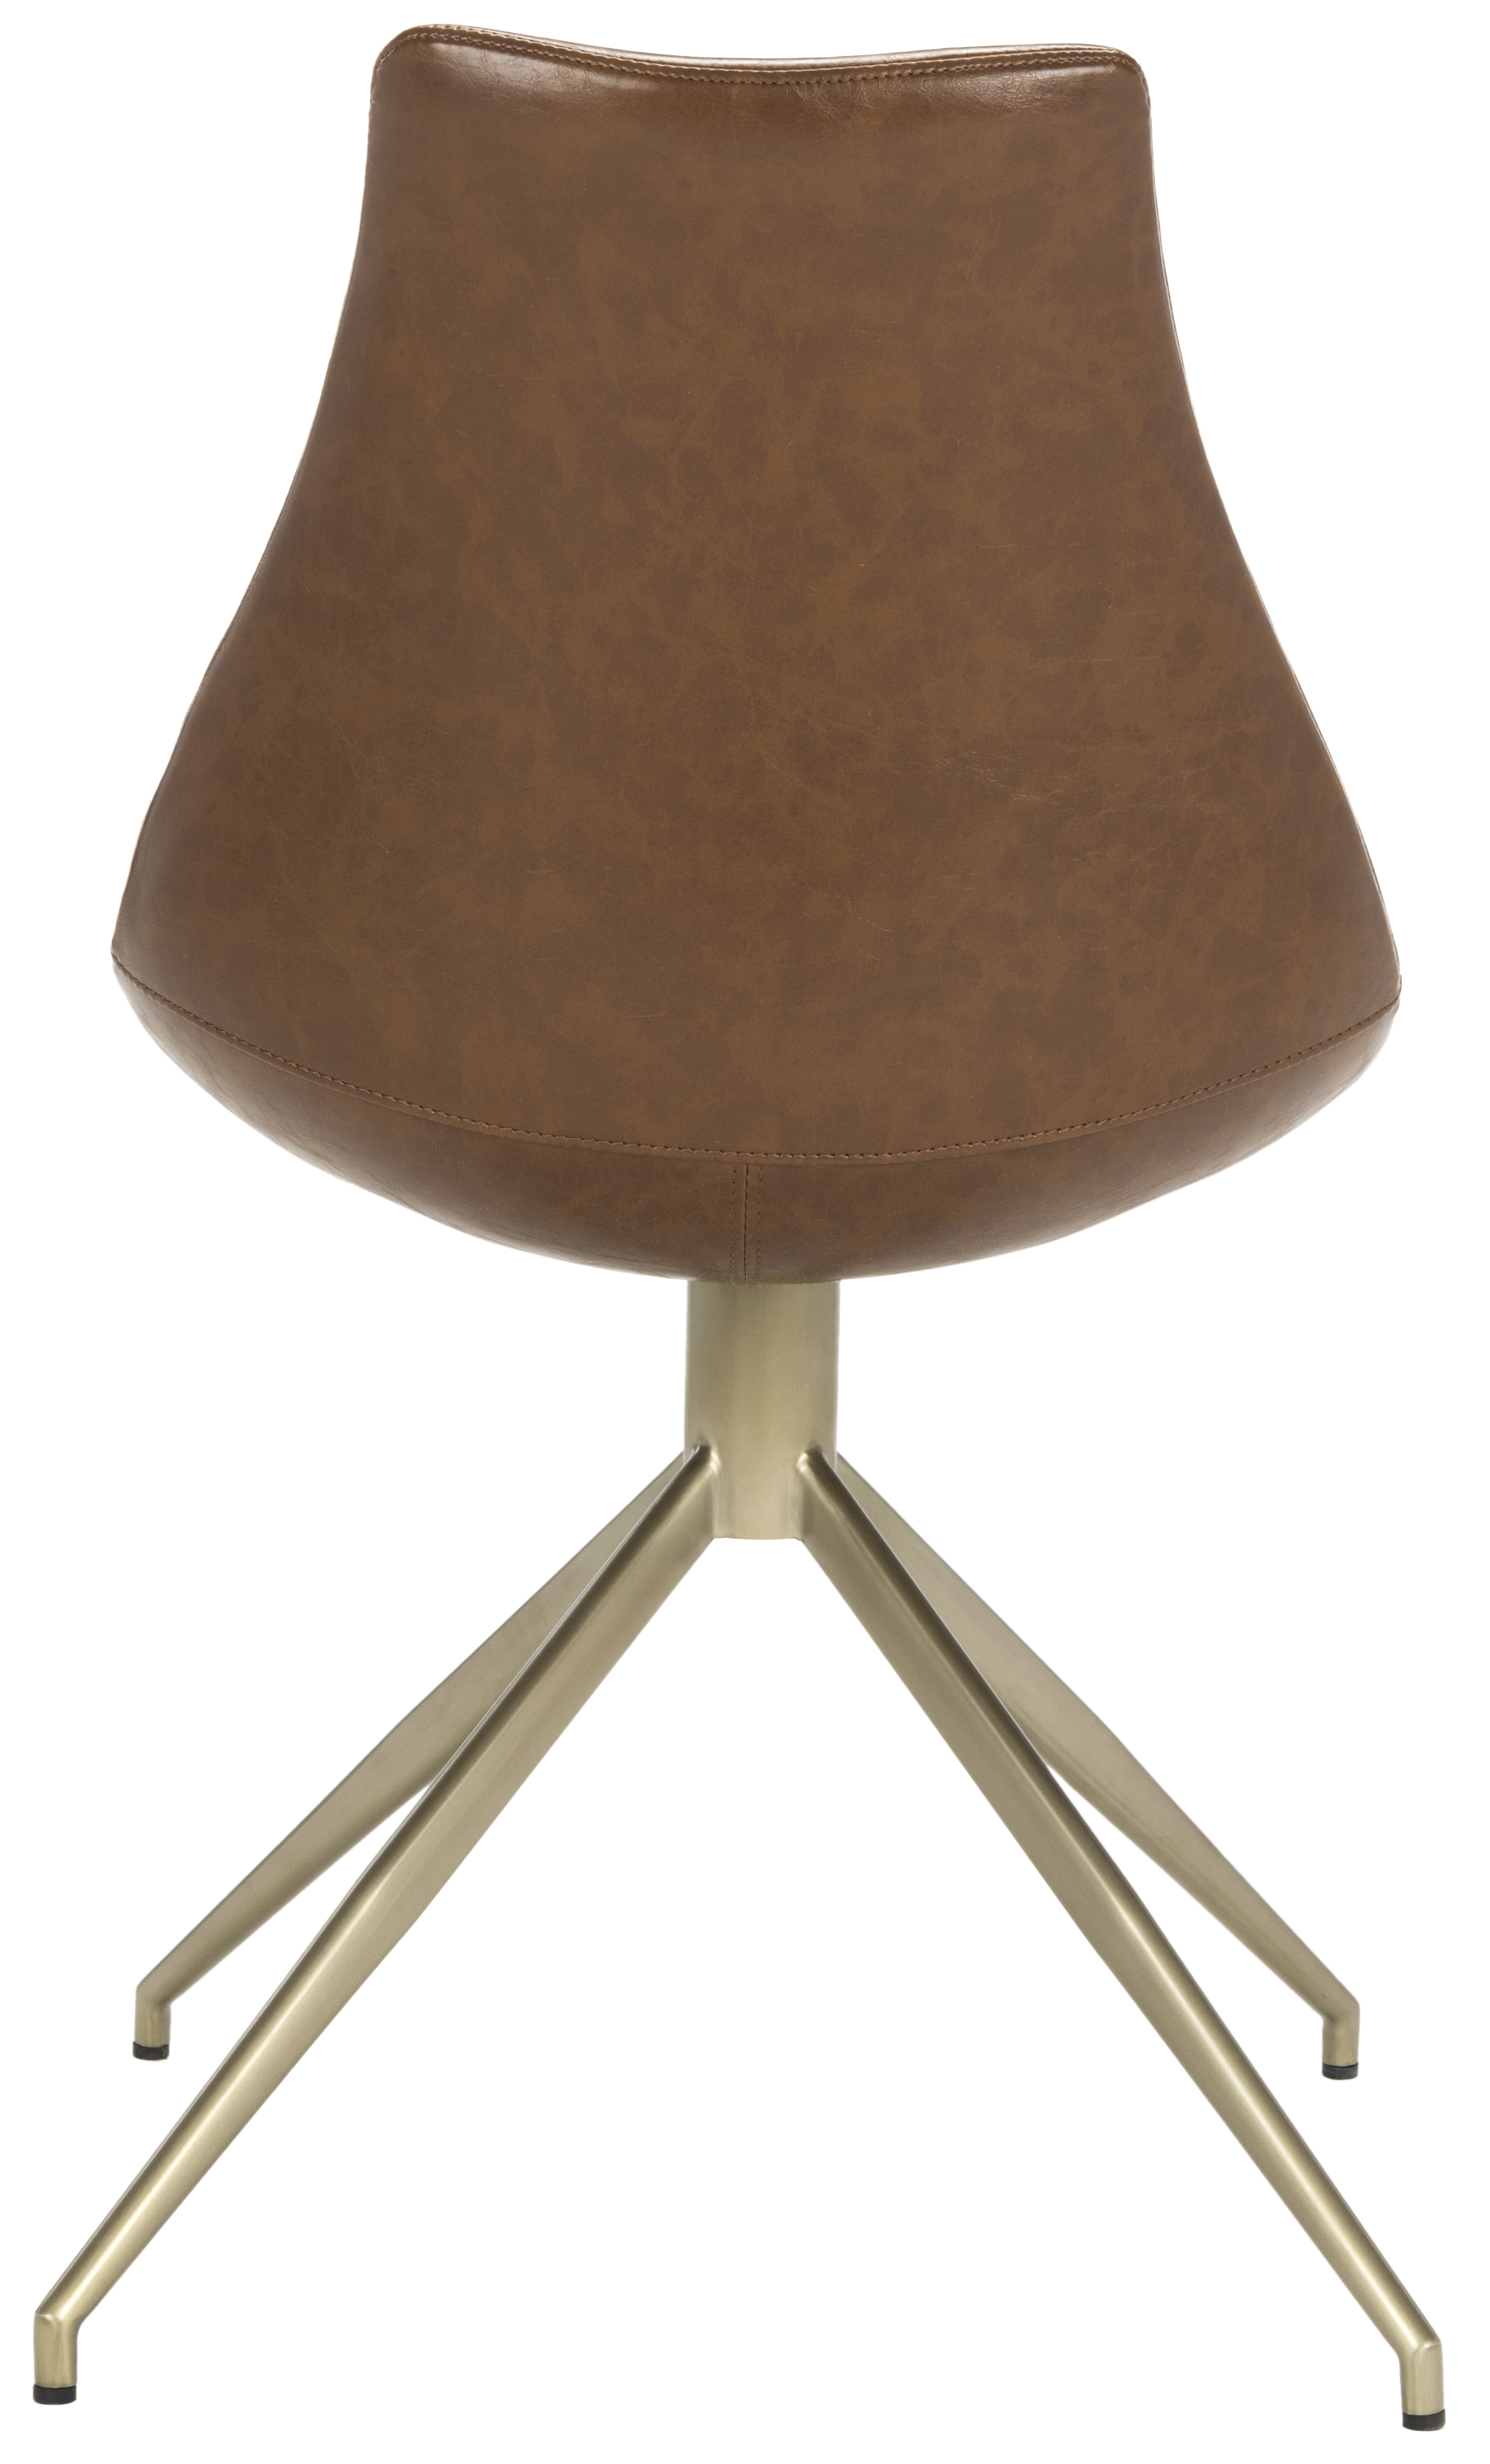 Lynette Midcentury Modern Leather Swivel Dining Chair - Light Brown/Brass - Arlo Home - Image 4